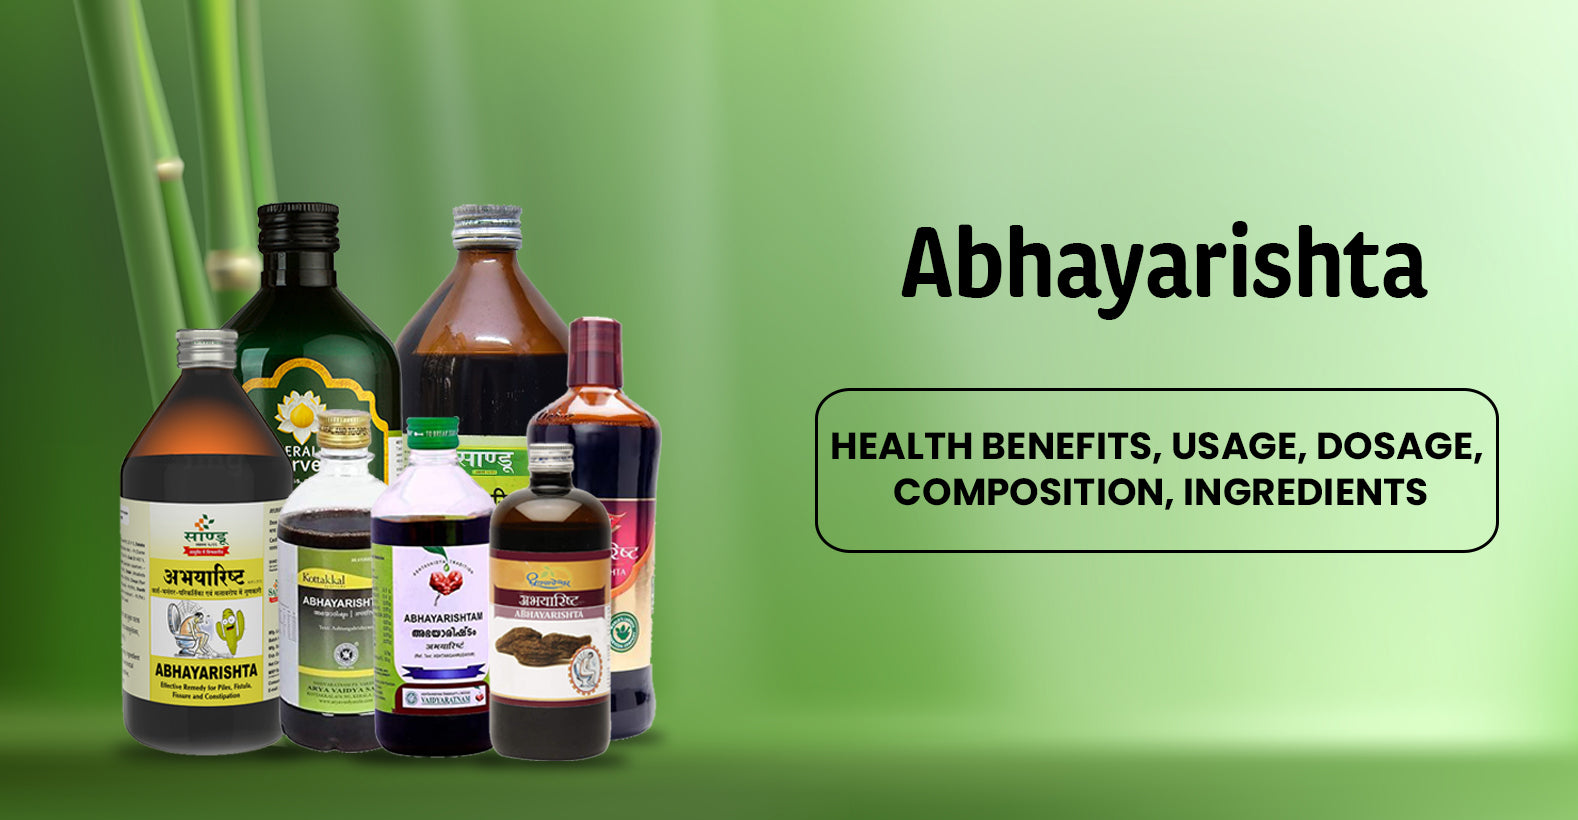 Abhayarishta- Ingredients, Composition, Properties, Health Benefits, Usage